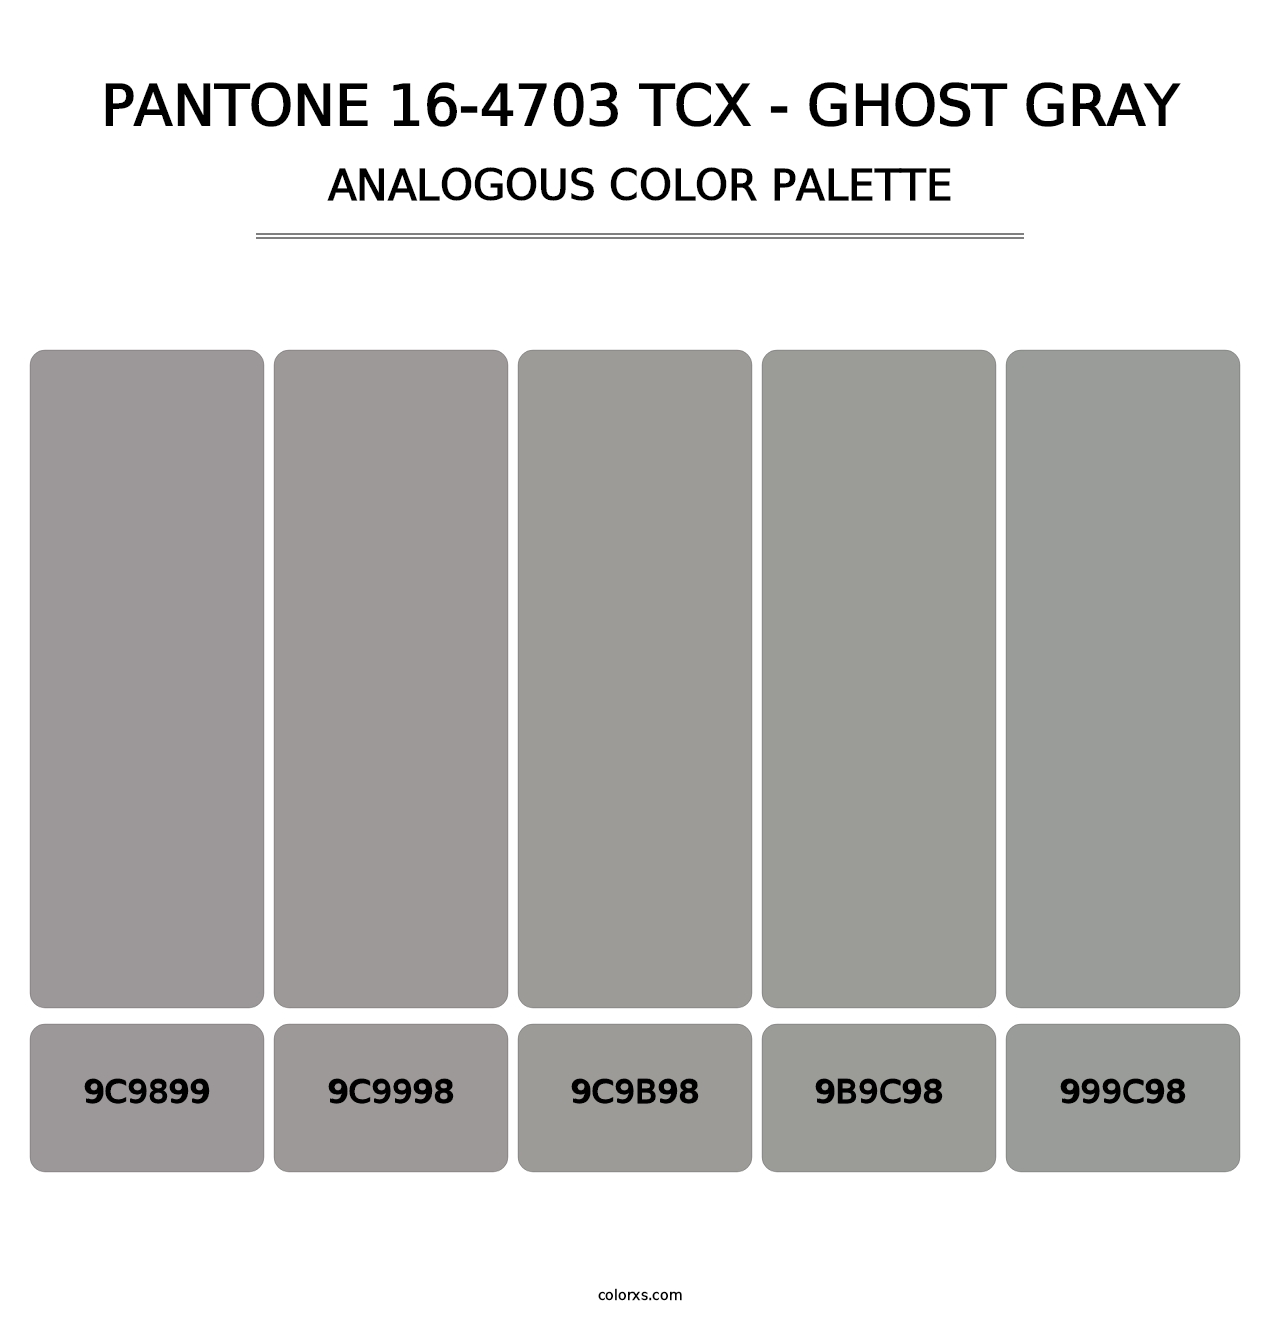 PANTONE 16-4703 TCX - Ghost Gray - Analogous Color Palette